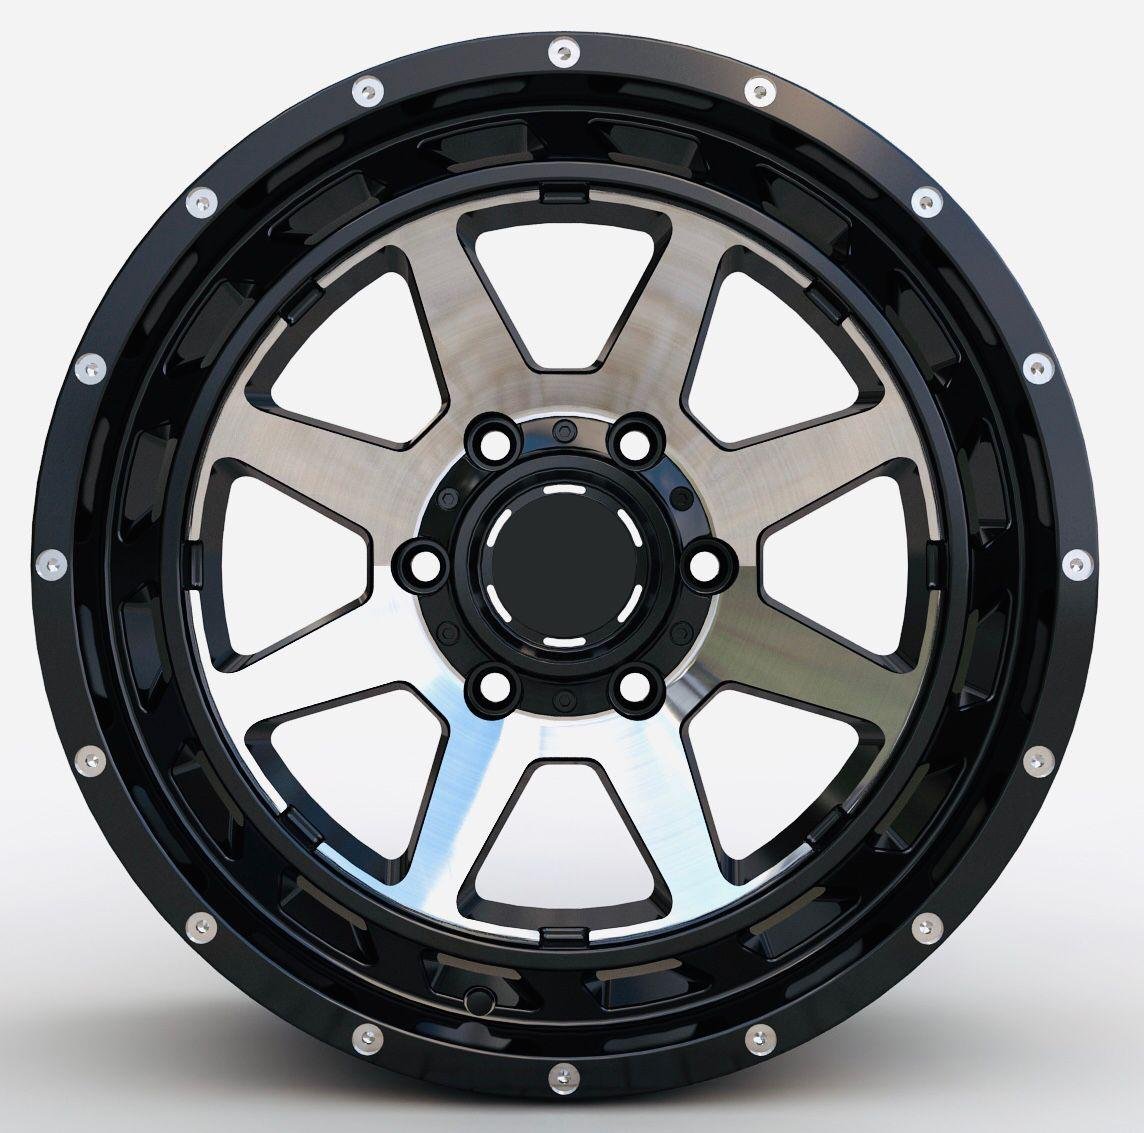 Aluminum Alloy Wheels-6x139.7 3